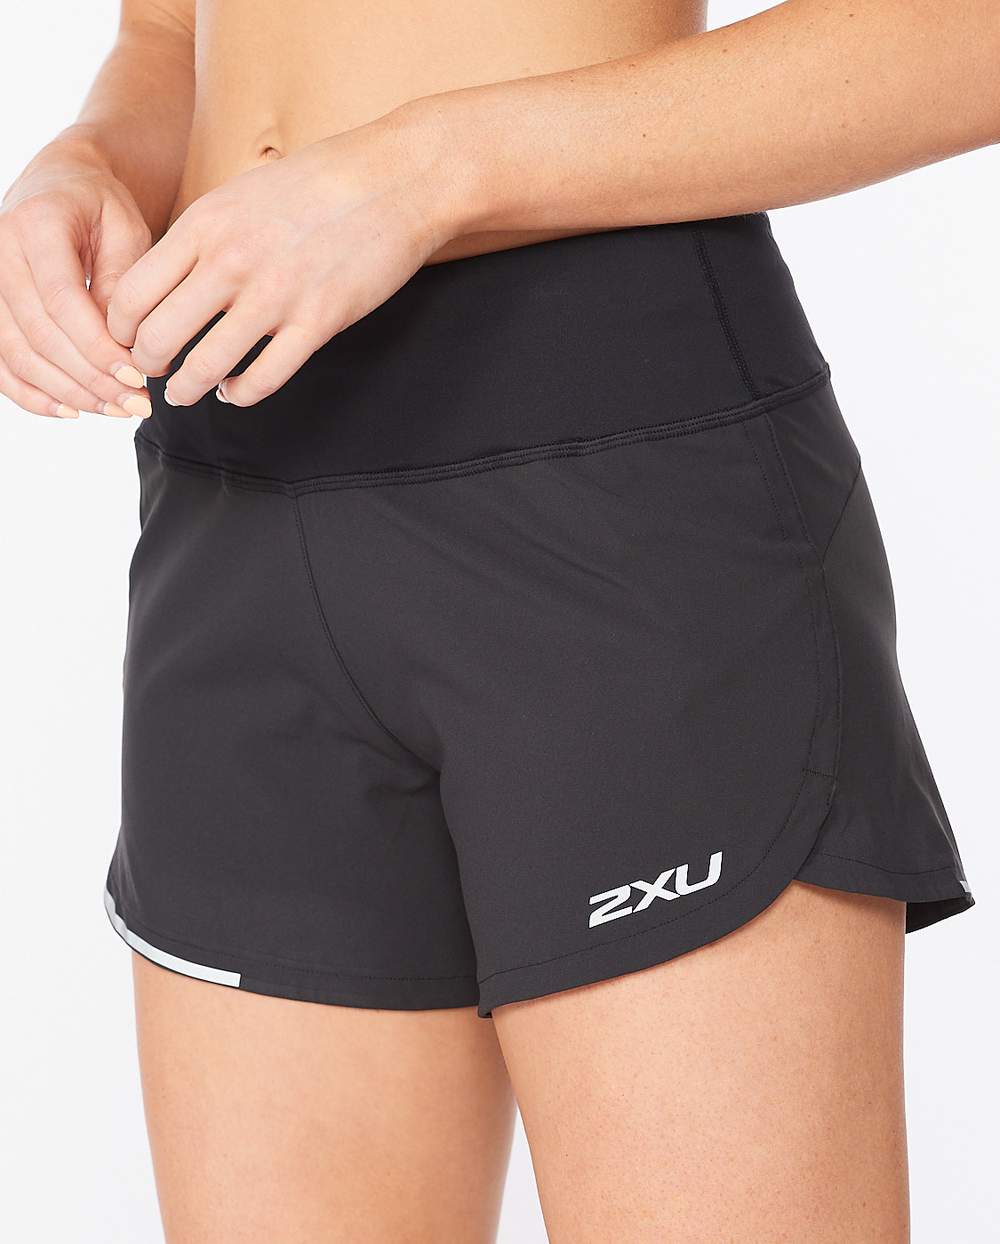 2XU Woman's Aero 4 Inch Shorts Black/Silver